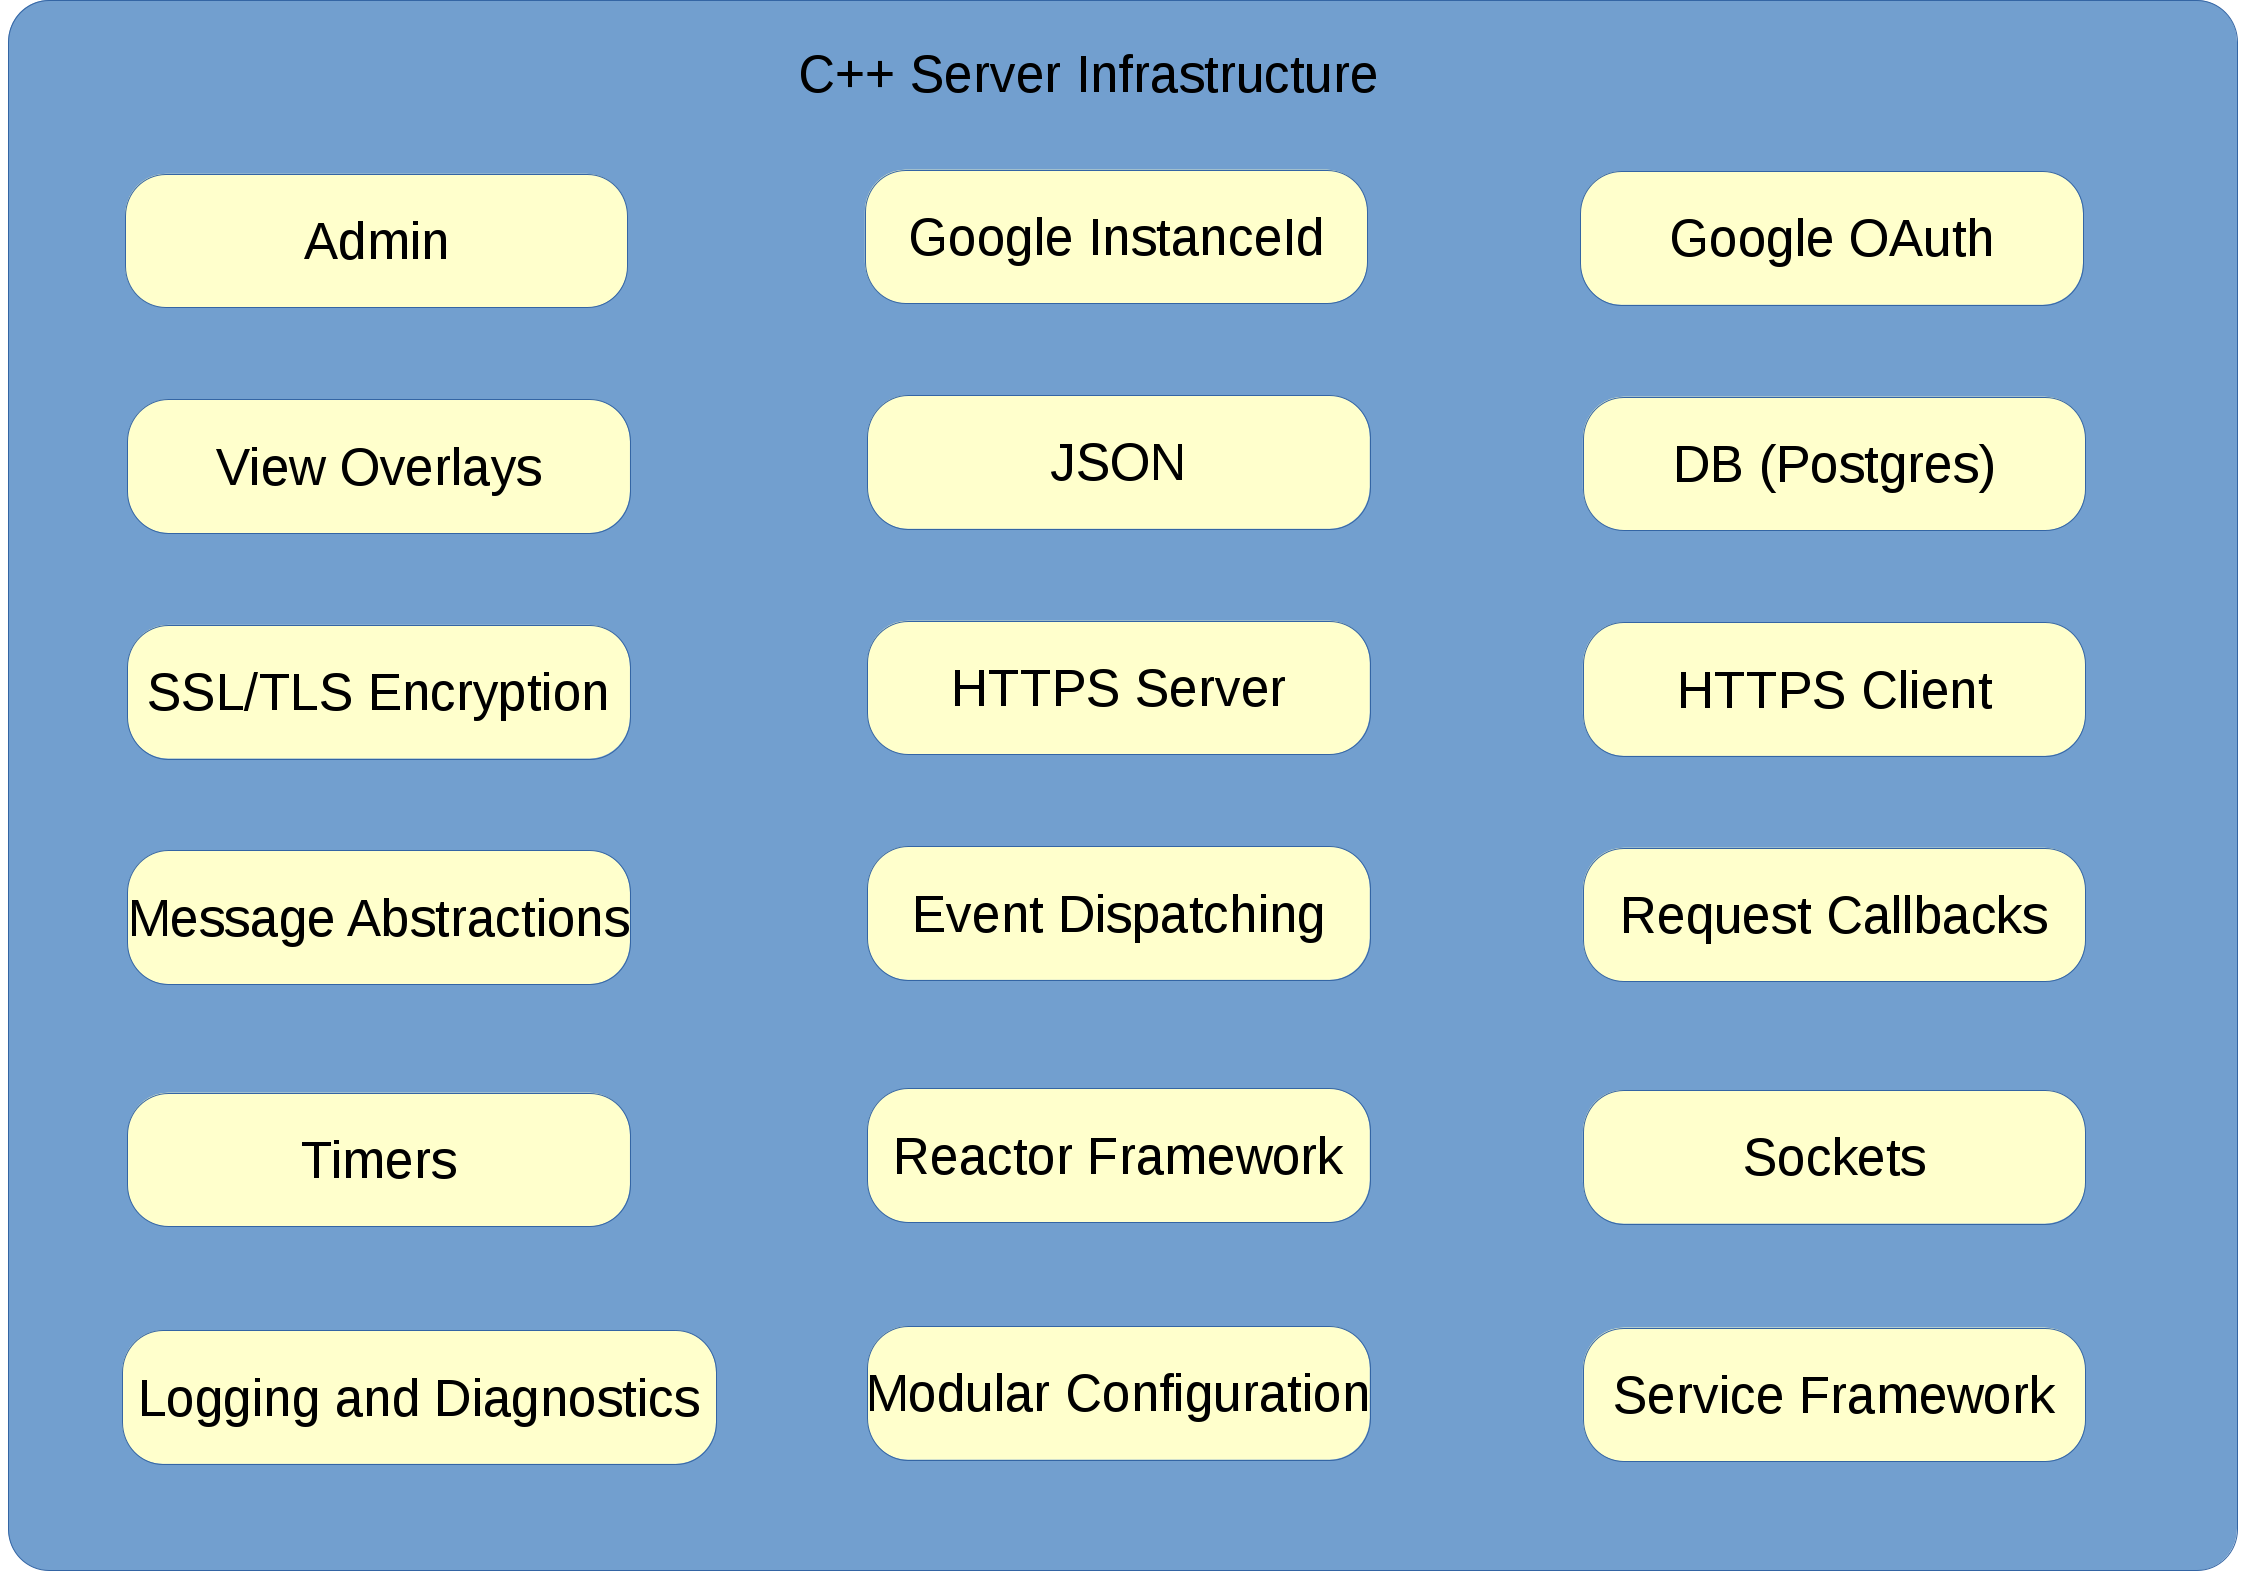 C++ infrastructure libraries